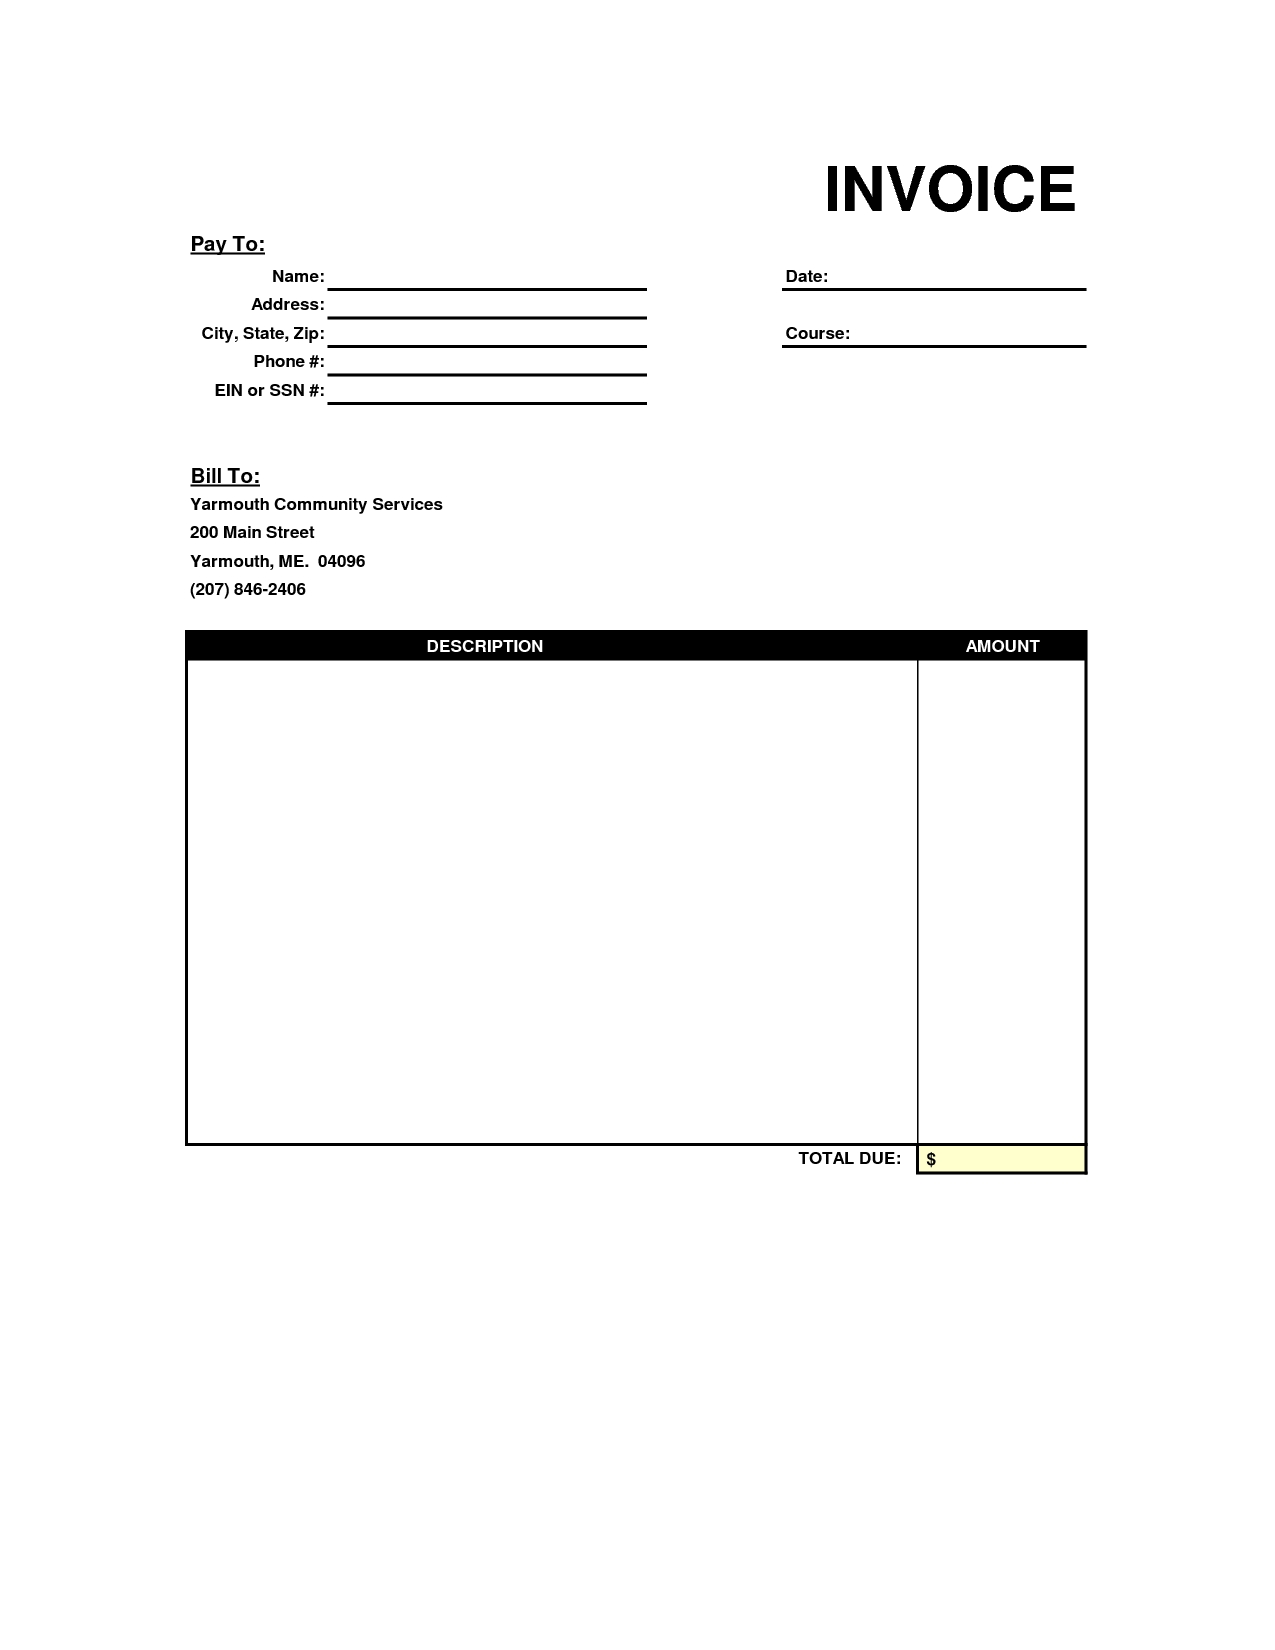 blank invoice paper blank invoice template blankinvoice blank printable invoice